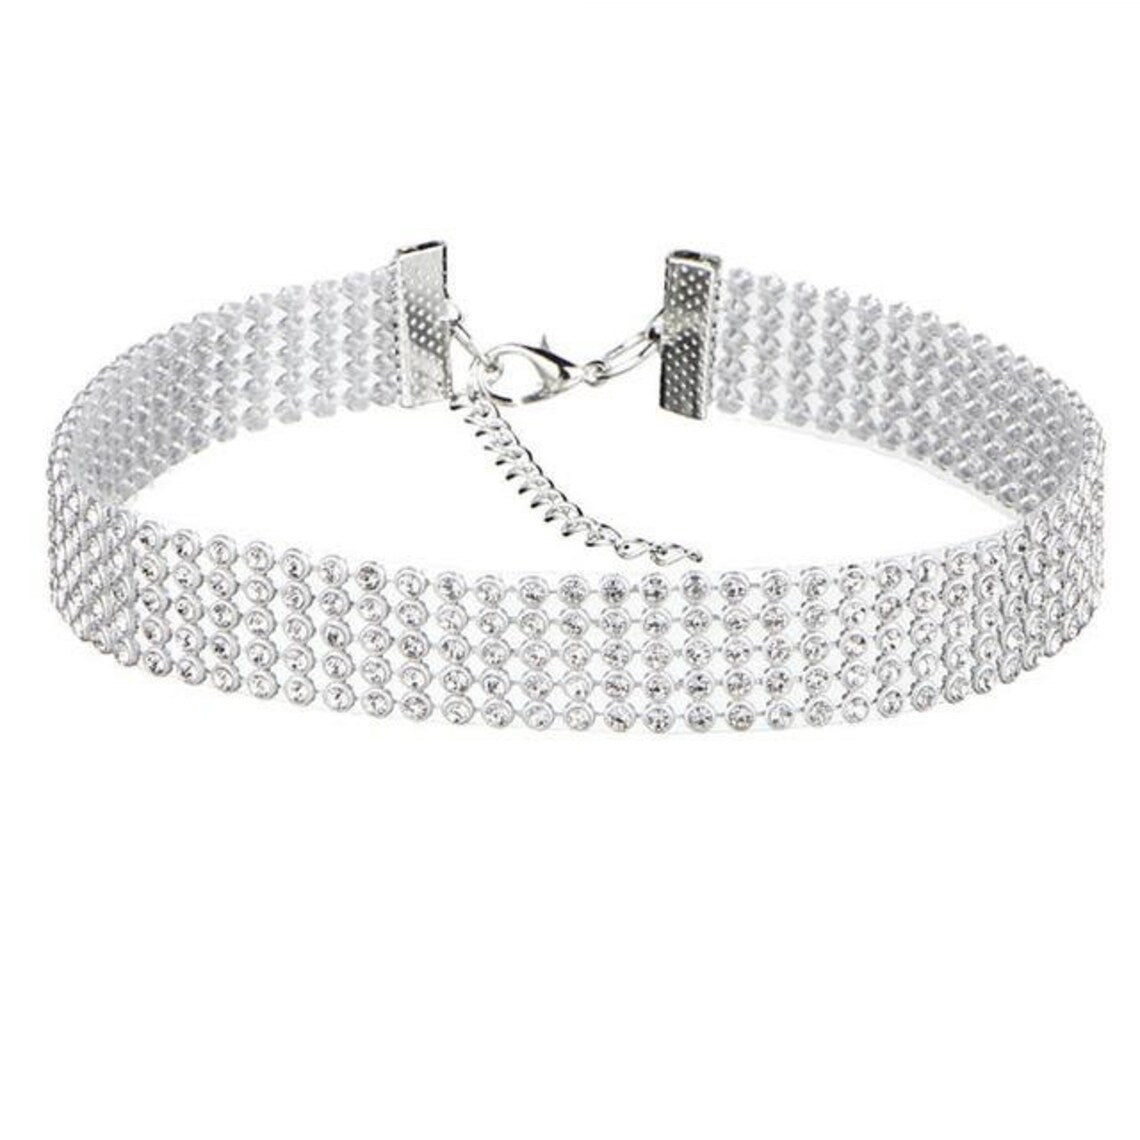 Crystal Rhinestone Sparkle Choker Necklace - Sparkle Jewelry Party Necklace For Women - jewelofkent